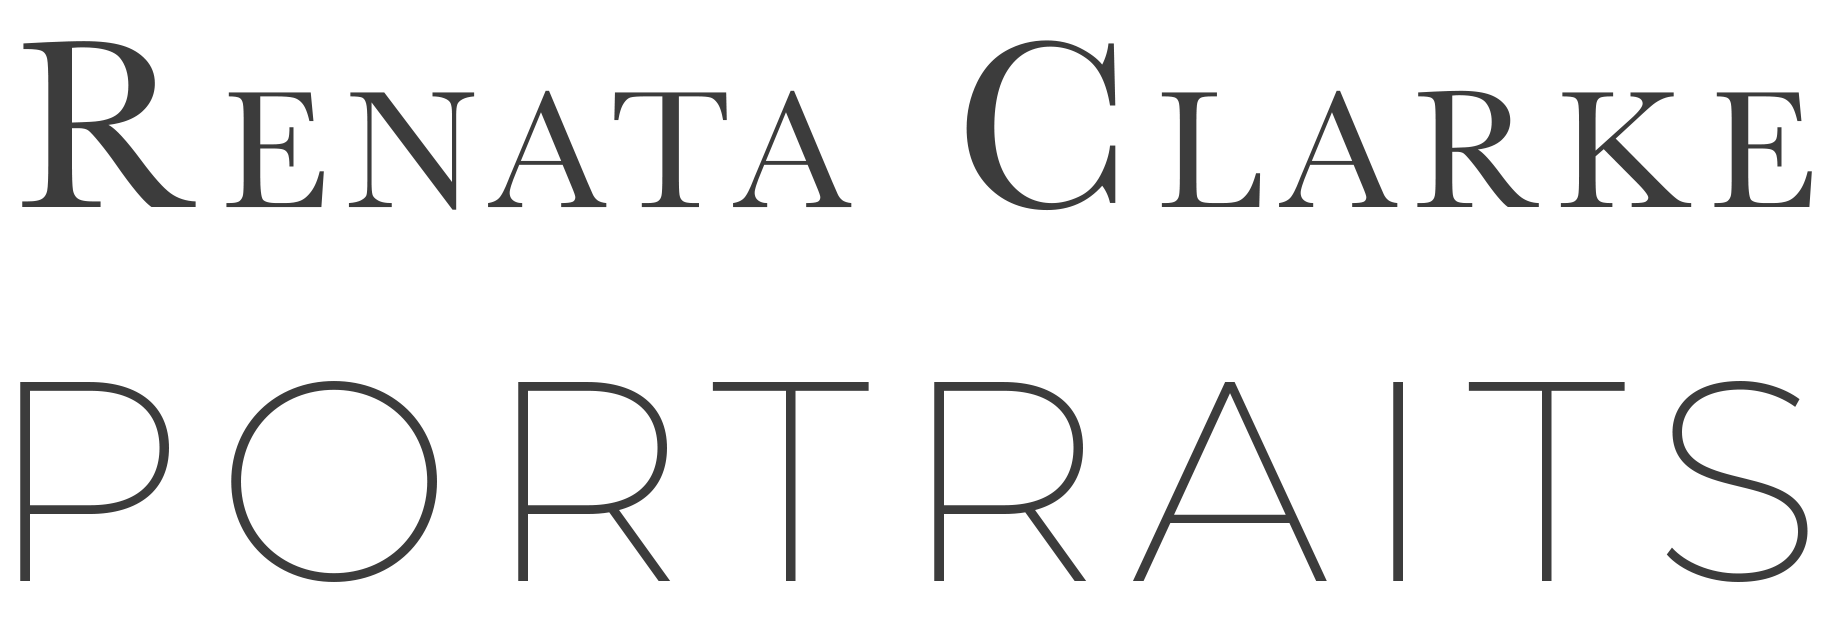 Renata Clarke Portraits logo